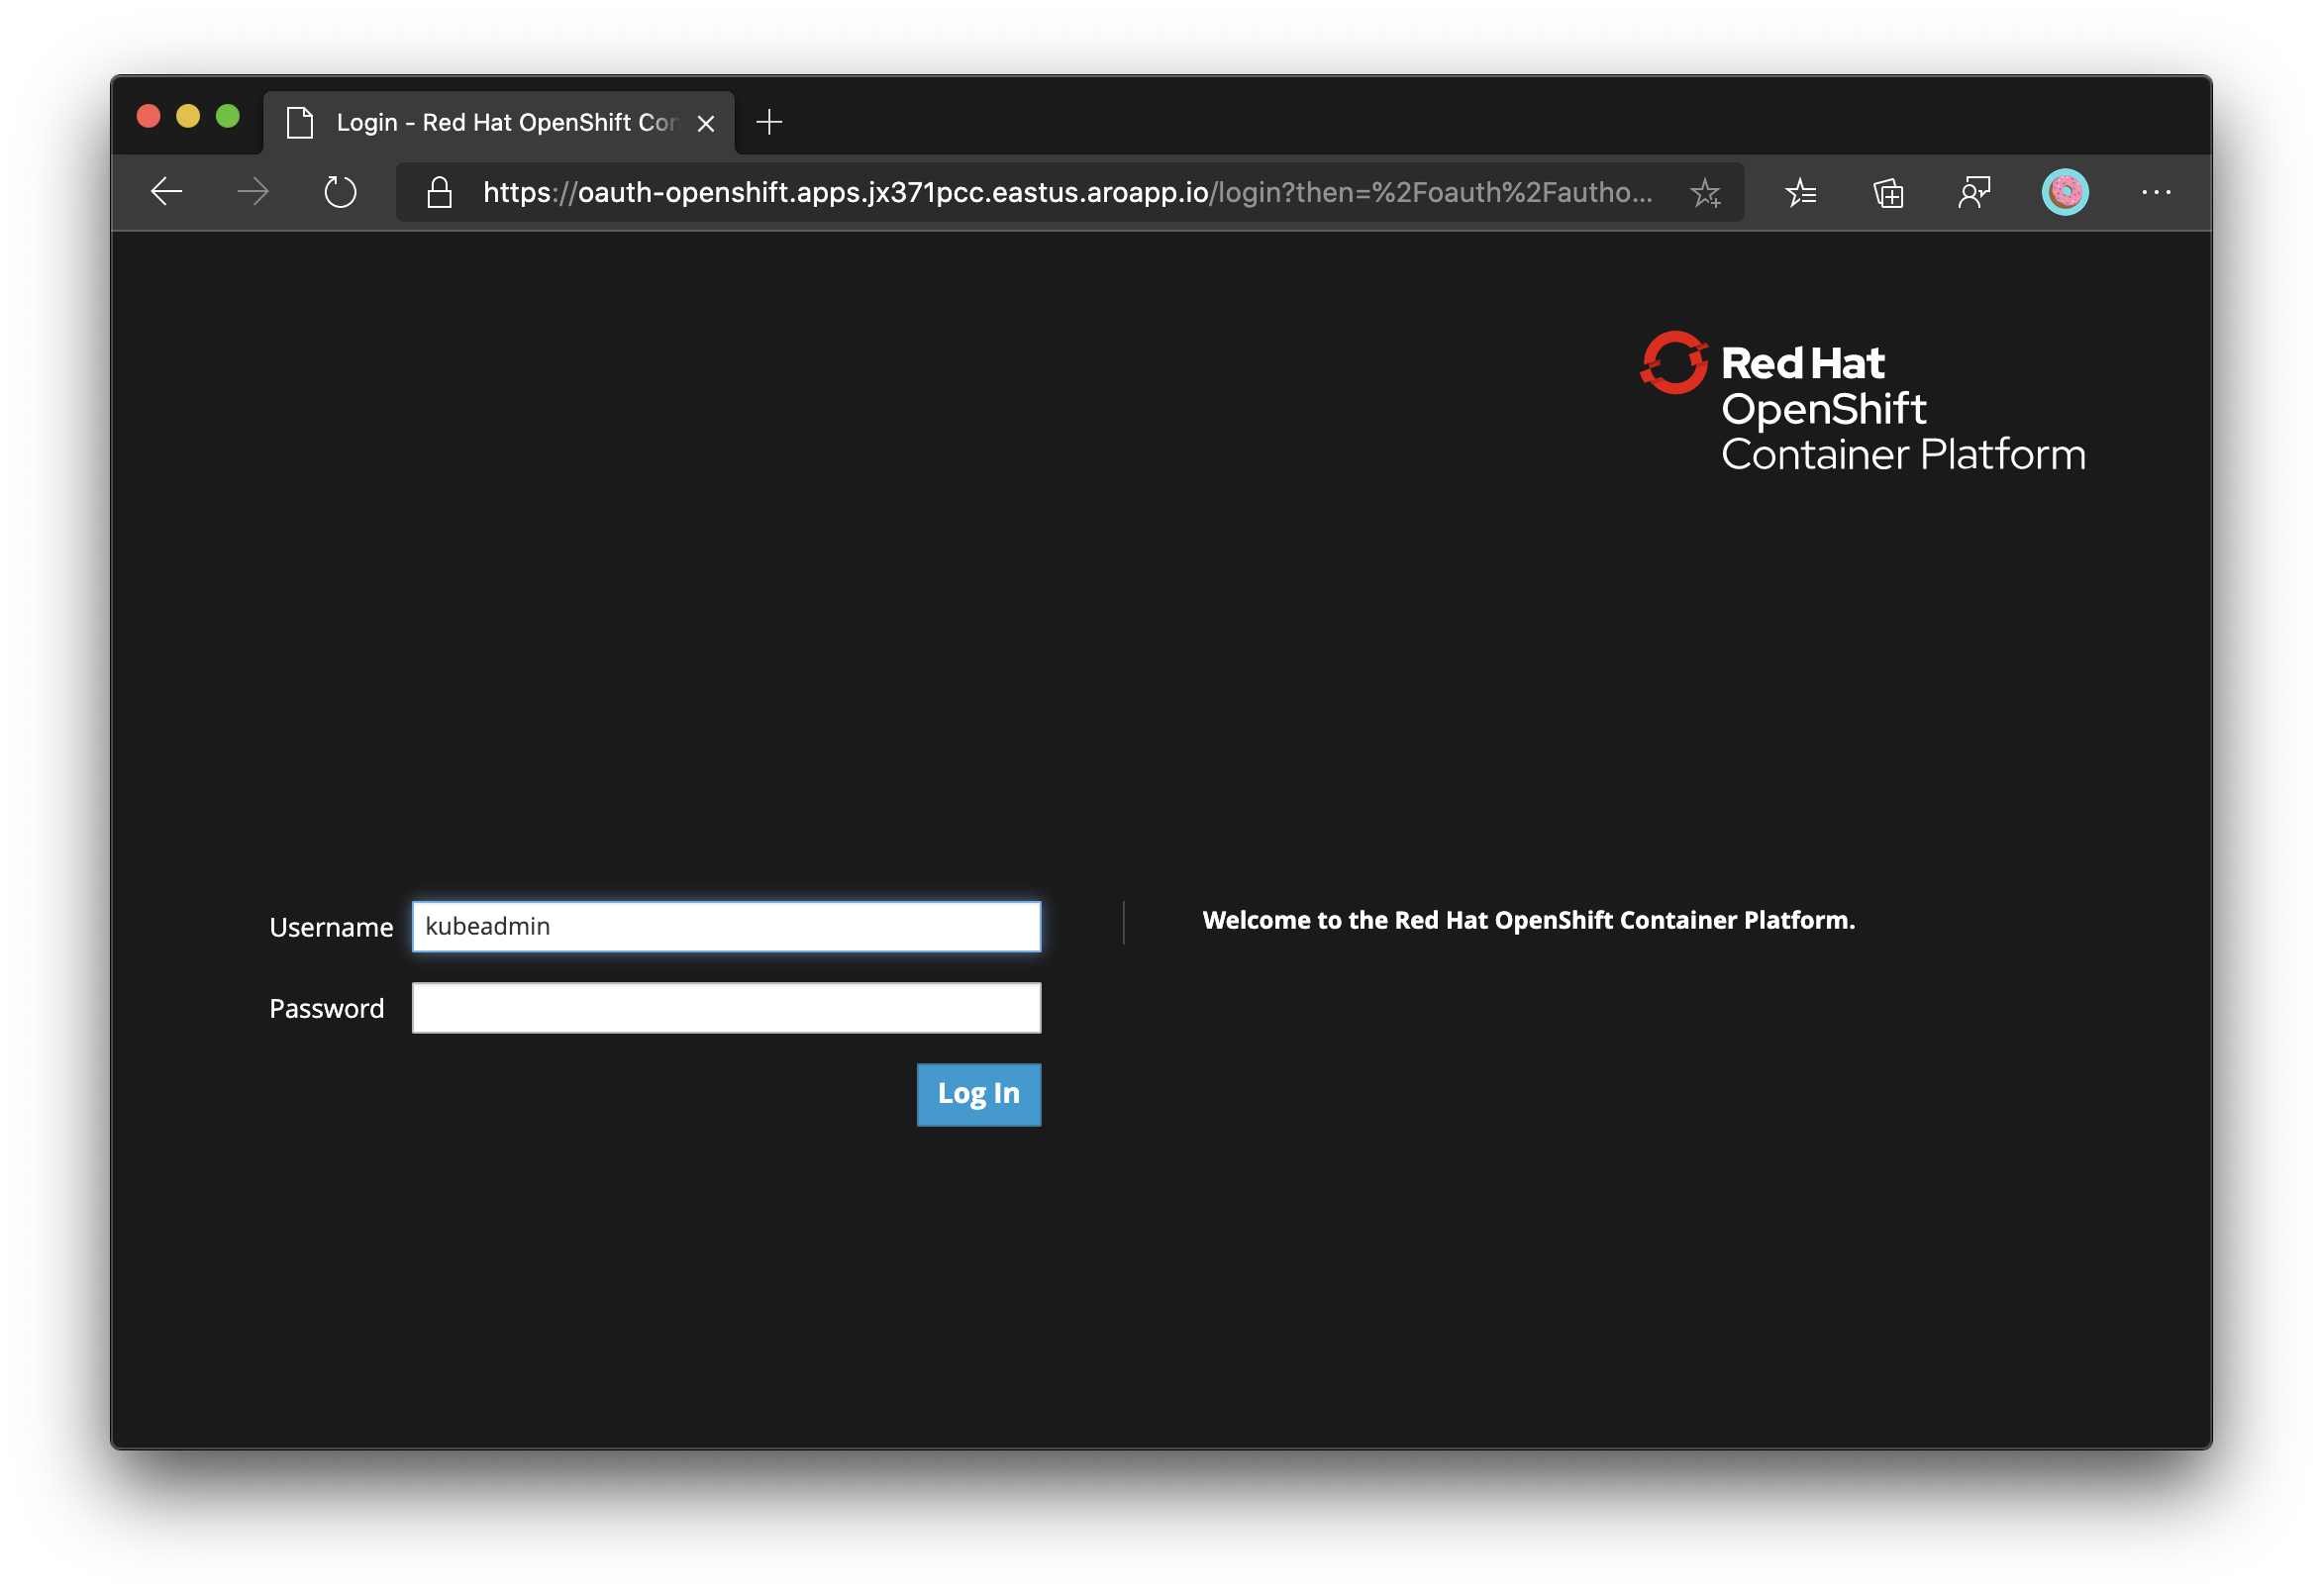 Ekran logowania usługi Azure Red Hat OpenShift